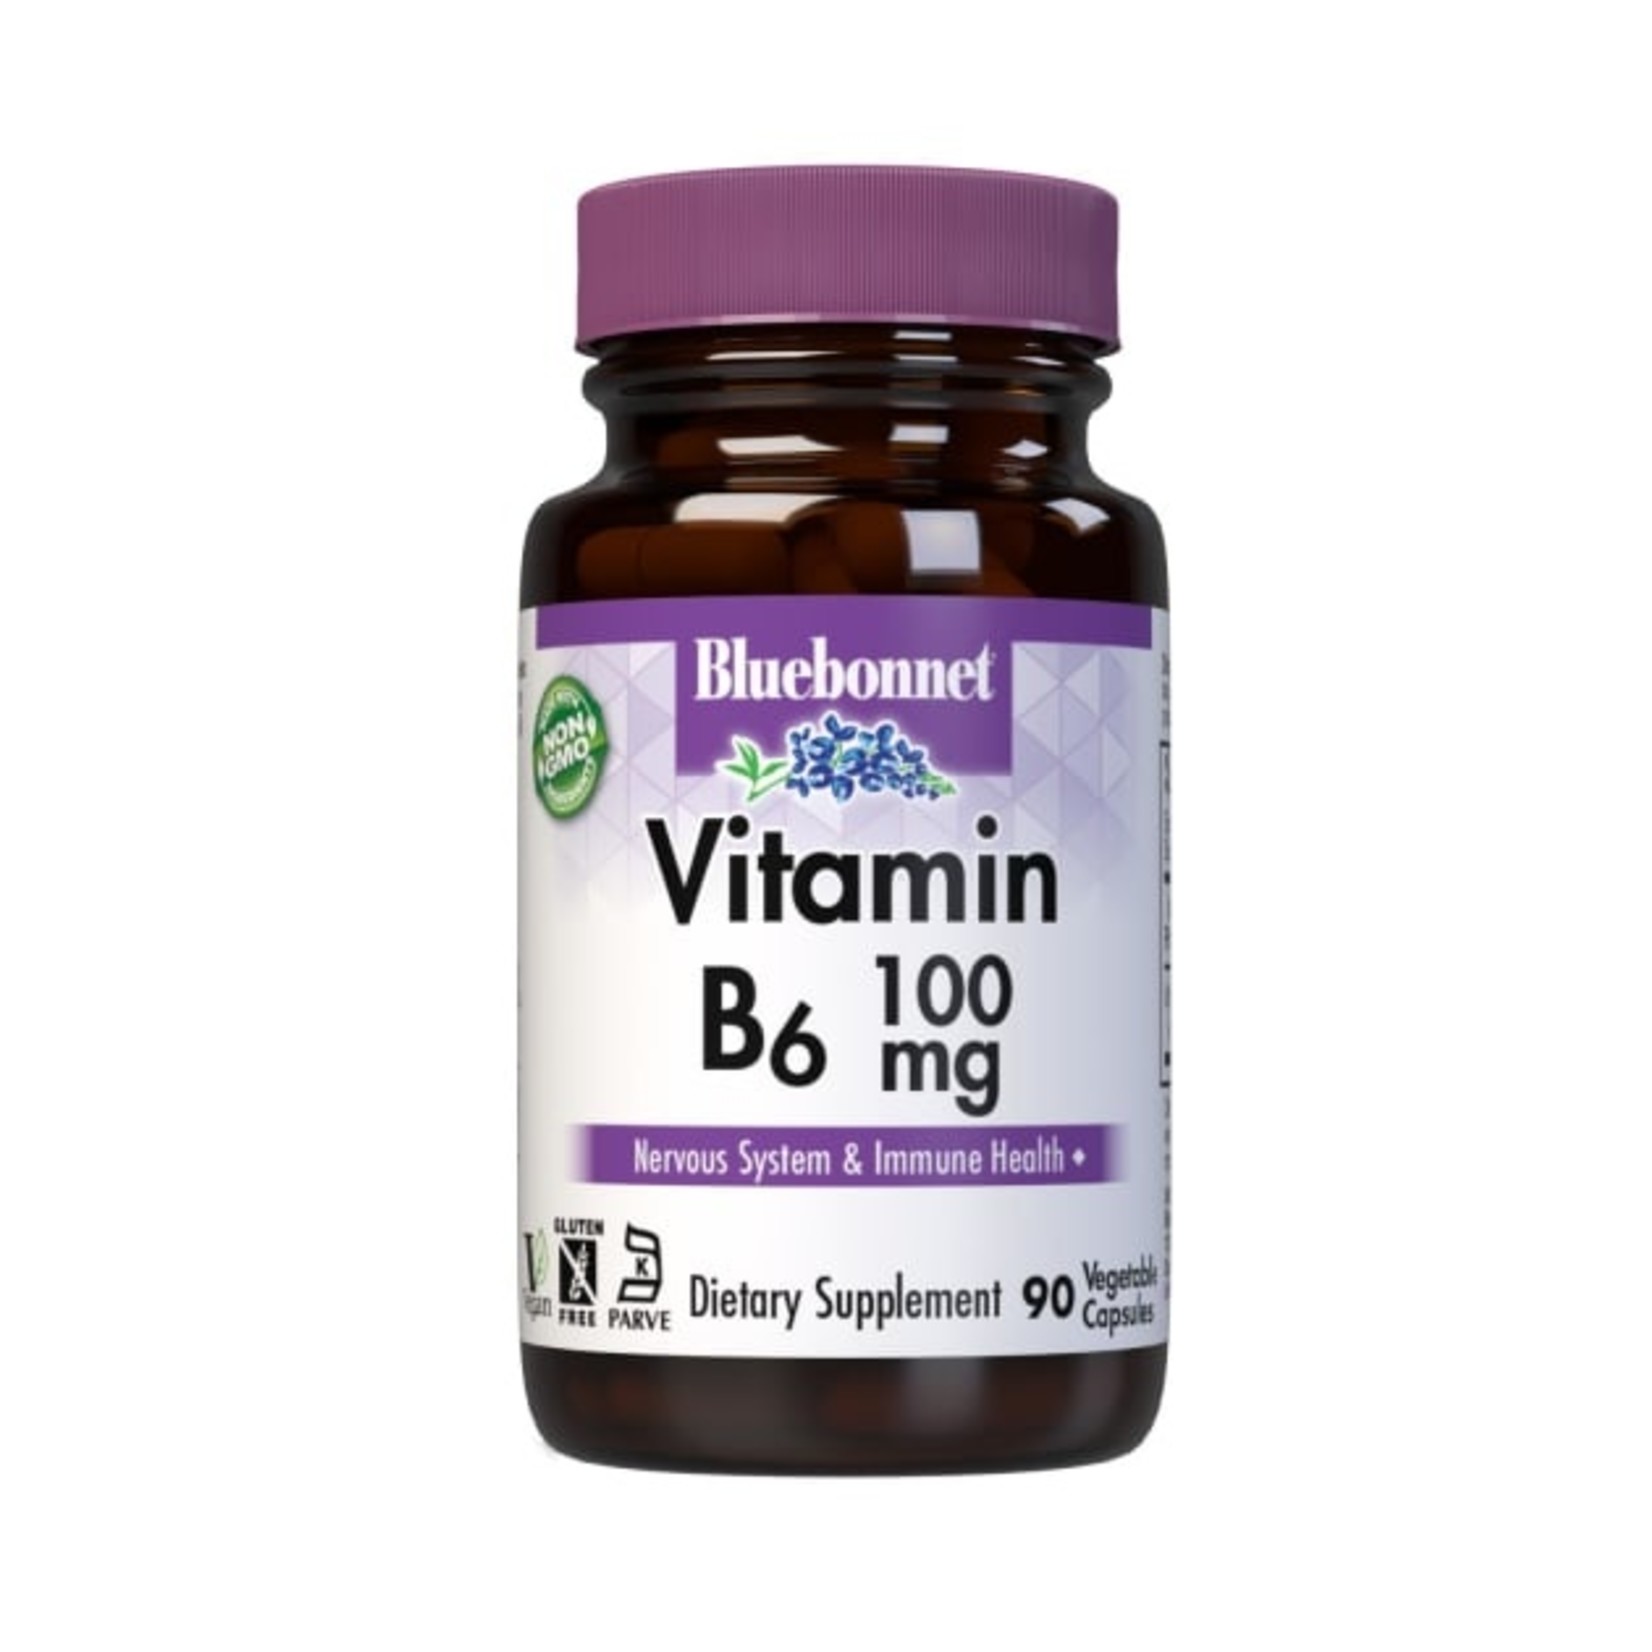 Bluebonnet Bluebonnet - Vitamin B6 100 mg - 90 Veg Capsules